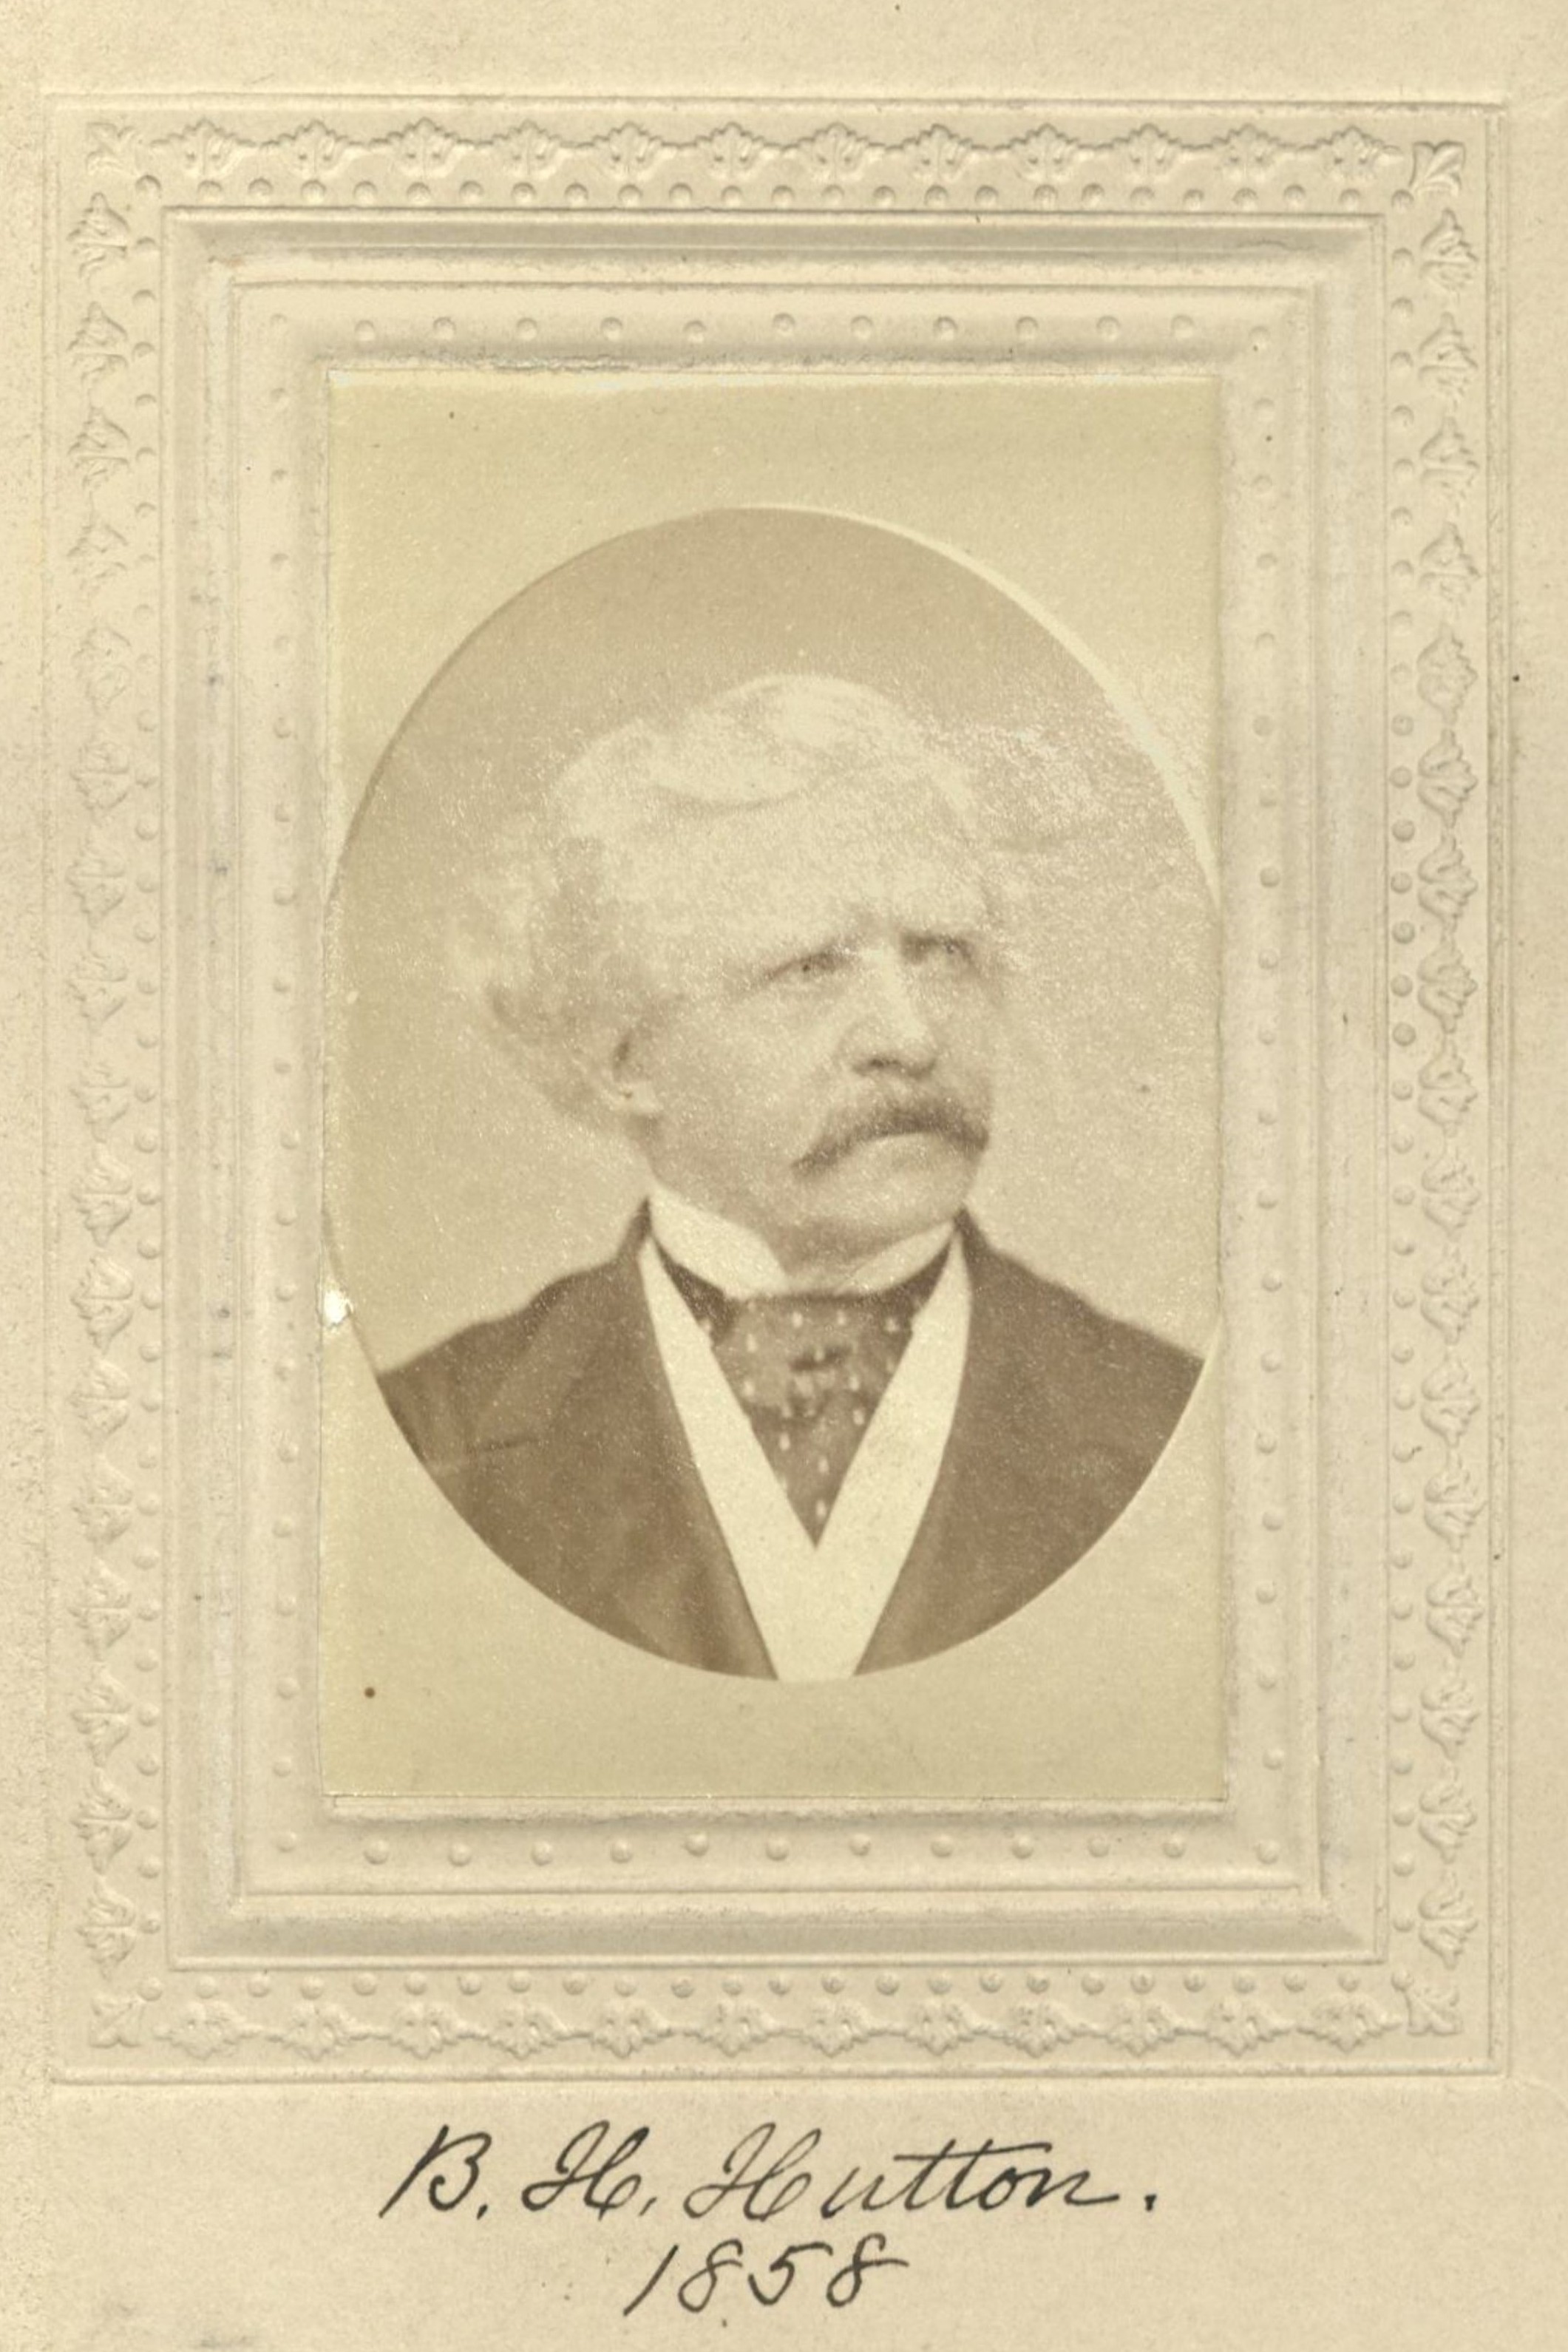 Member portrait of Benjamin H. Hutton